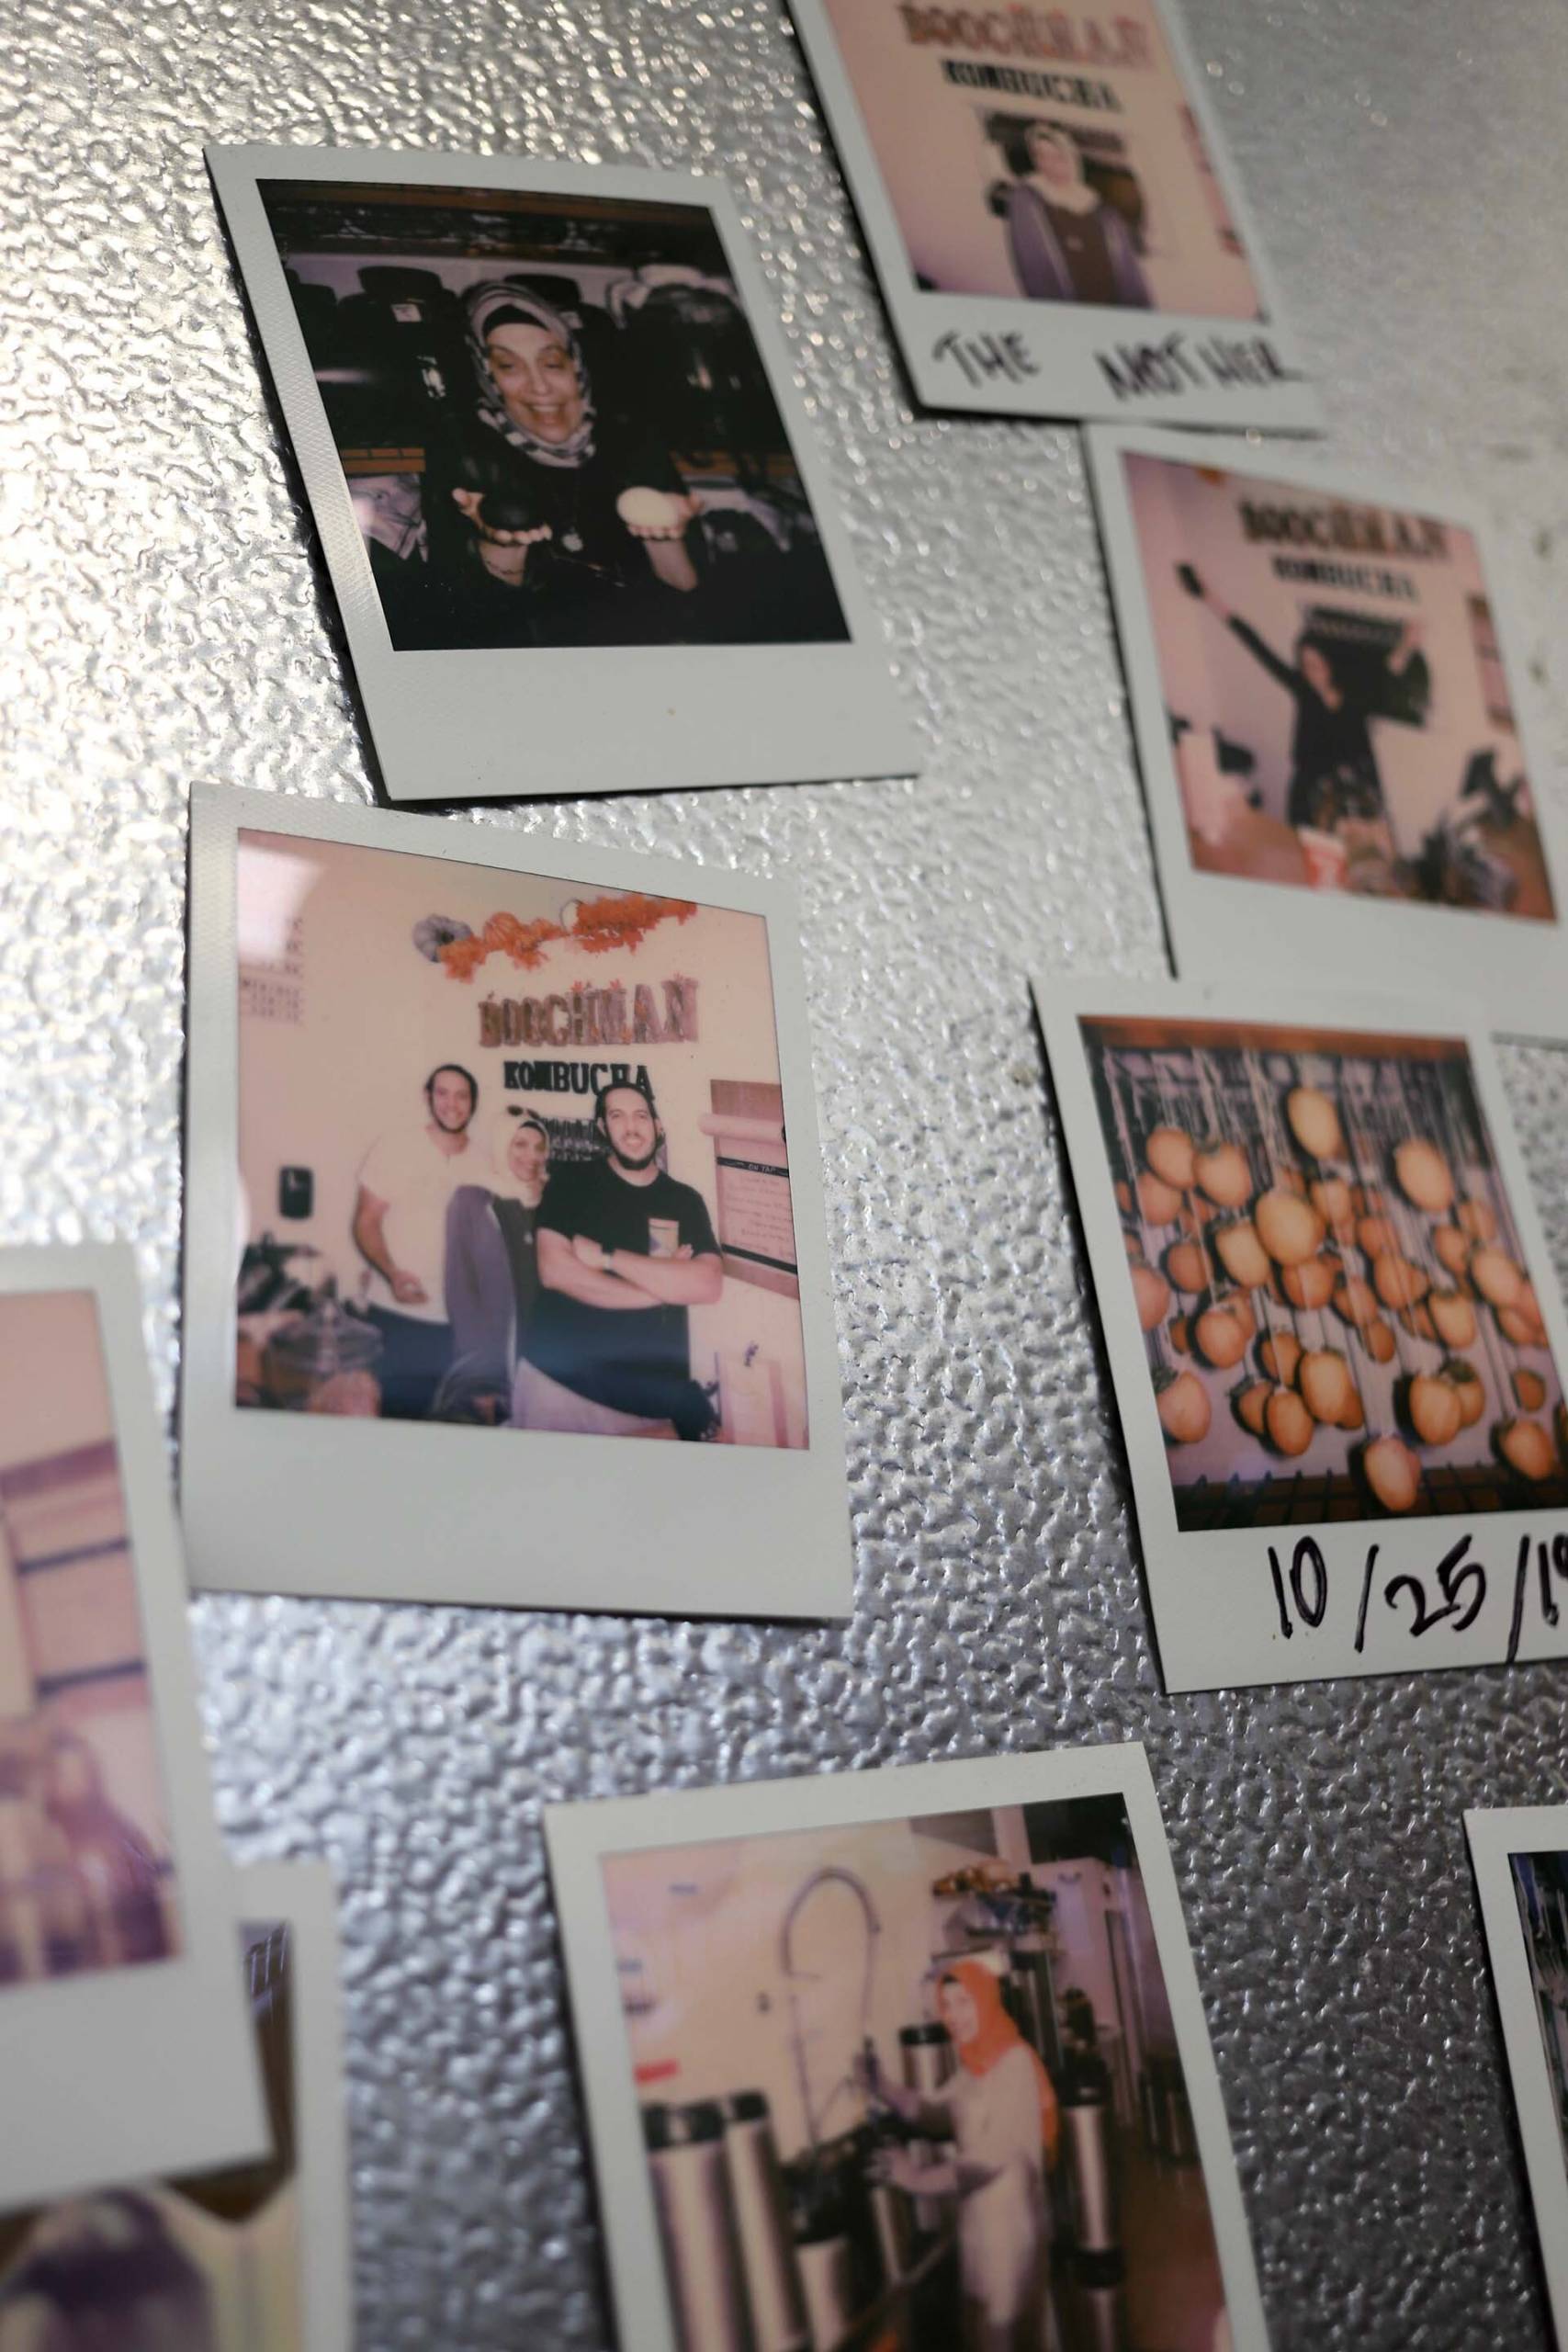 an array of Polaroid photographs showing Turkish family members at Boochman Kombucha in Berkeley